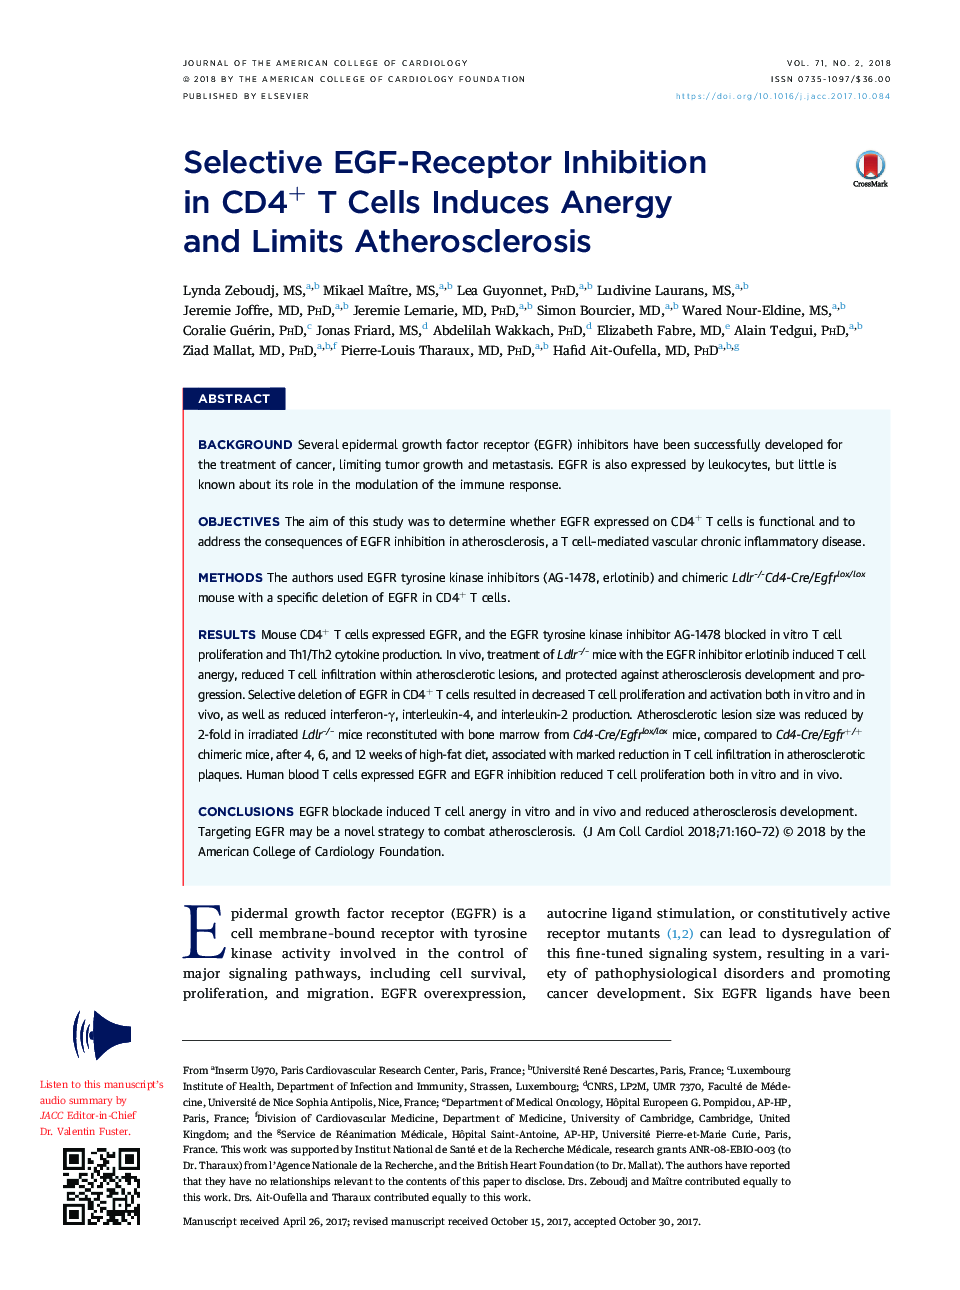 Selective EGF-Receptor Inhibition inÂ CD4+Â TÂ Cells Induces Anergy andÂ LimitsÂ Atherosclerosis